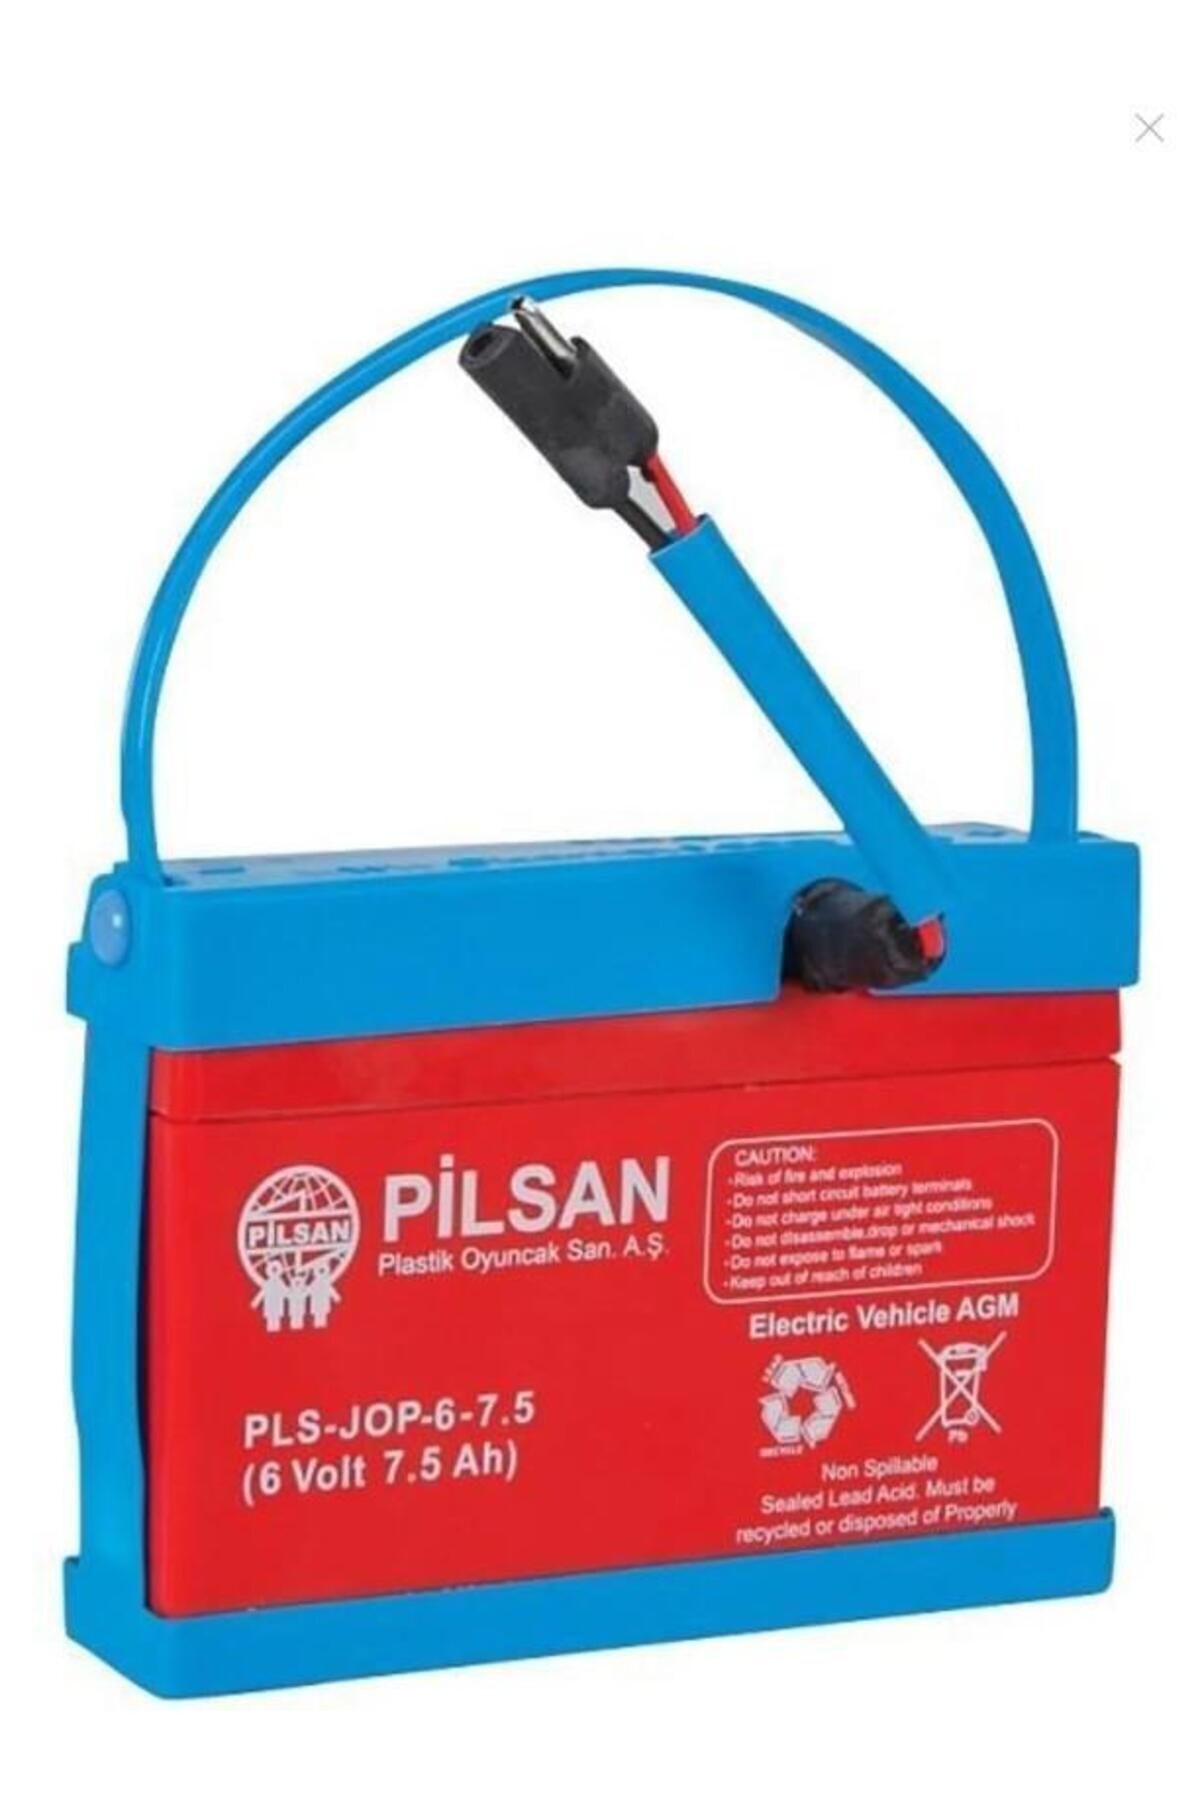 PİLSAN Pilsan 6 Volt Akü 7.5 Ah Kısa Kablolu Soketli Üstün Performans Akü Batarya